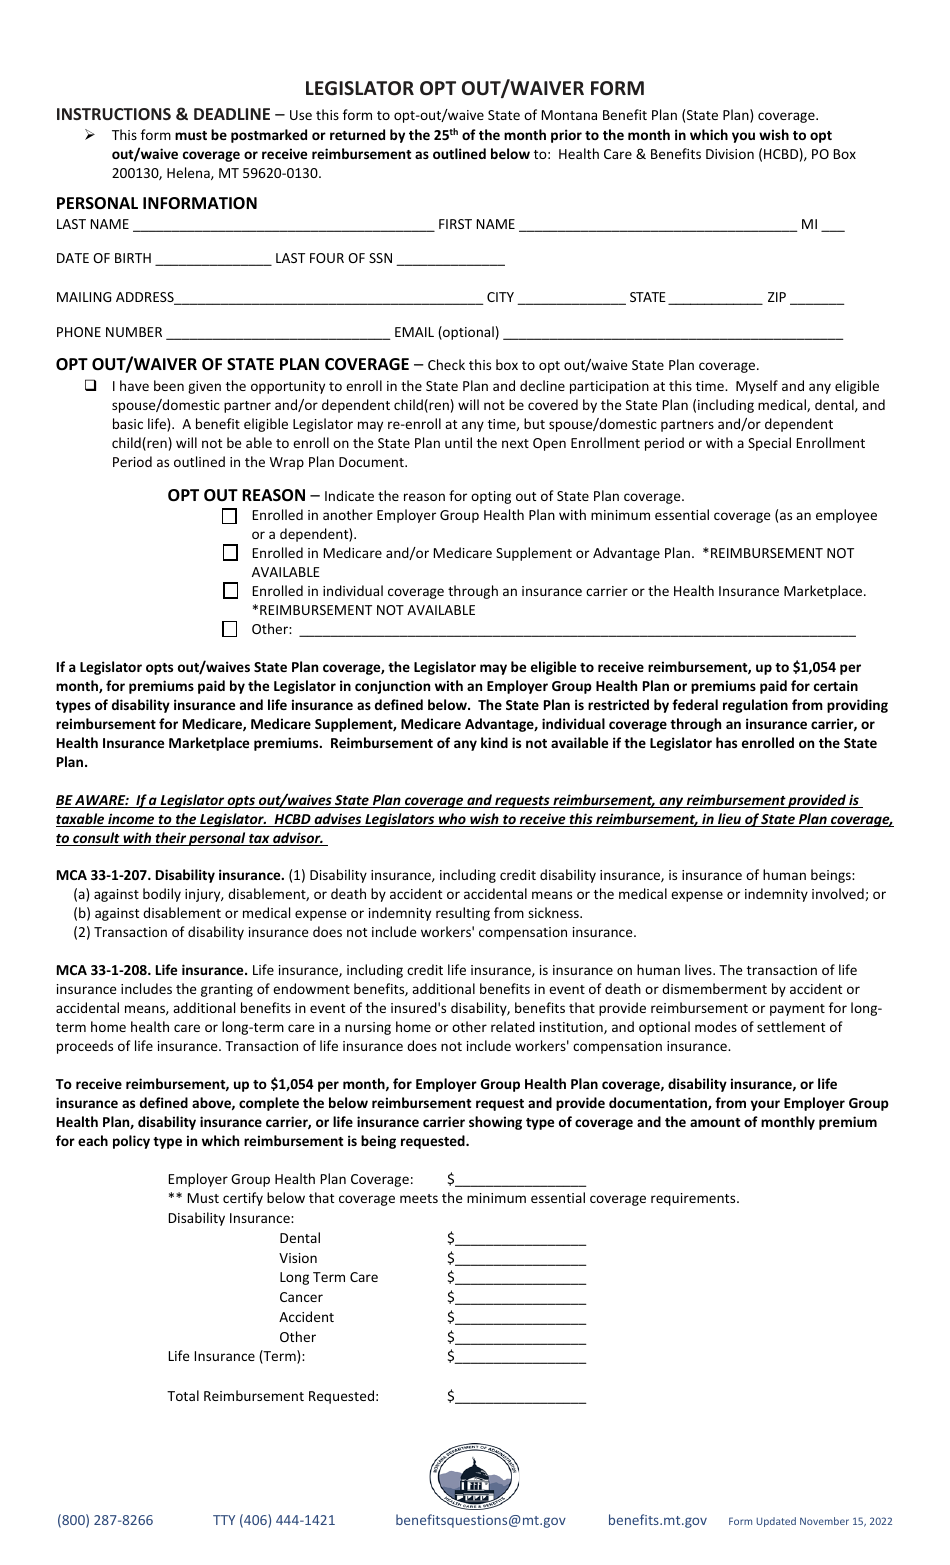 Legislator Opt out / Waiver Form - Montana, Page 1